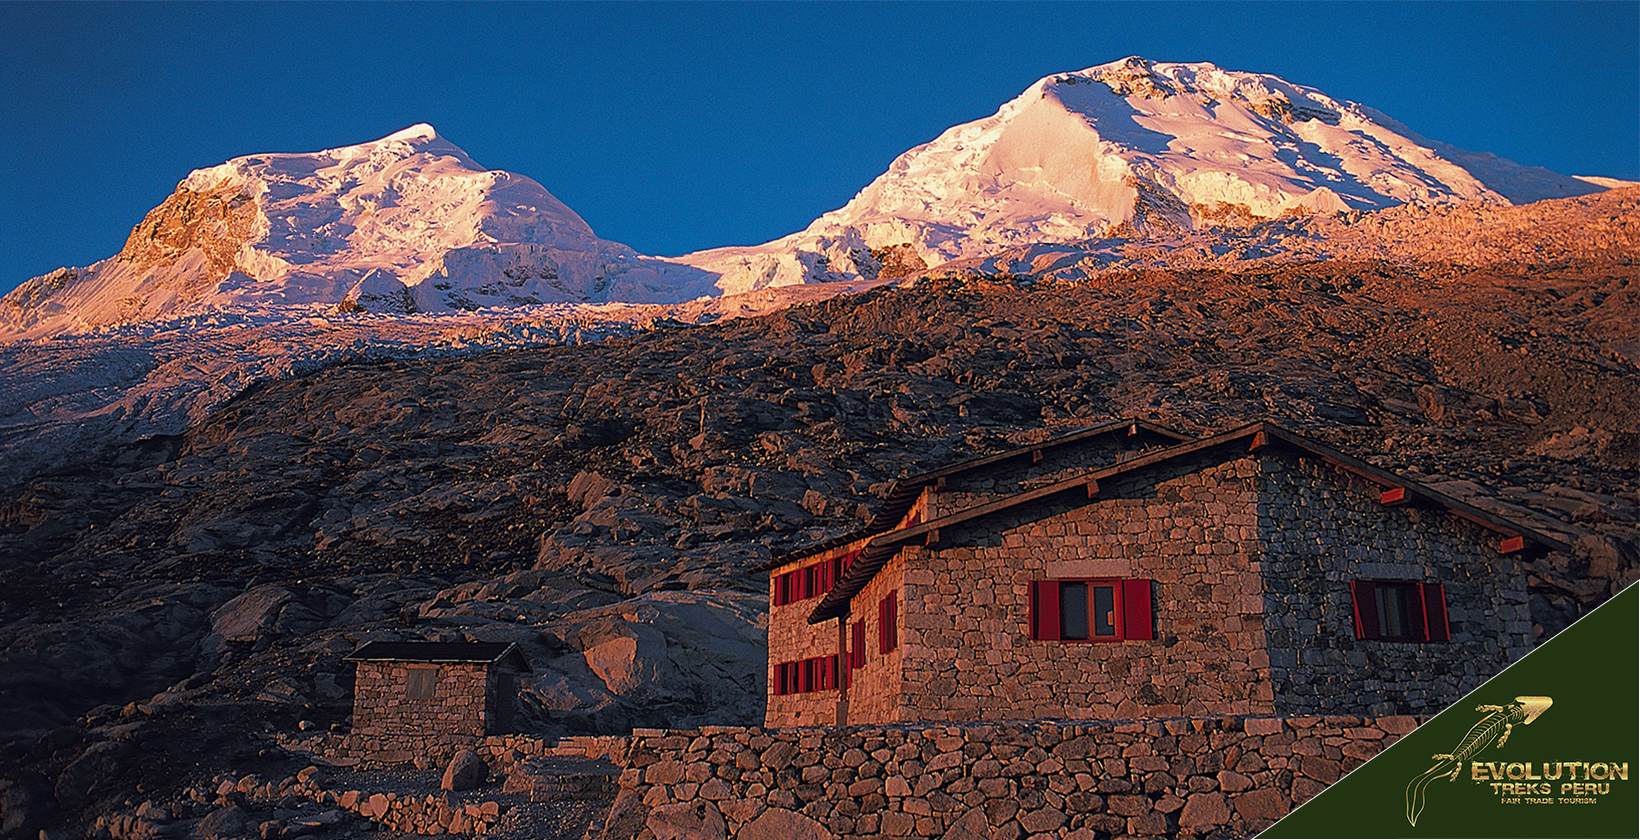 Huascaran Peru Guide: History, Hiking, Facts, Maps, and Tours